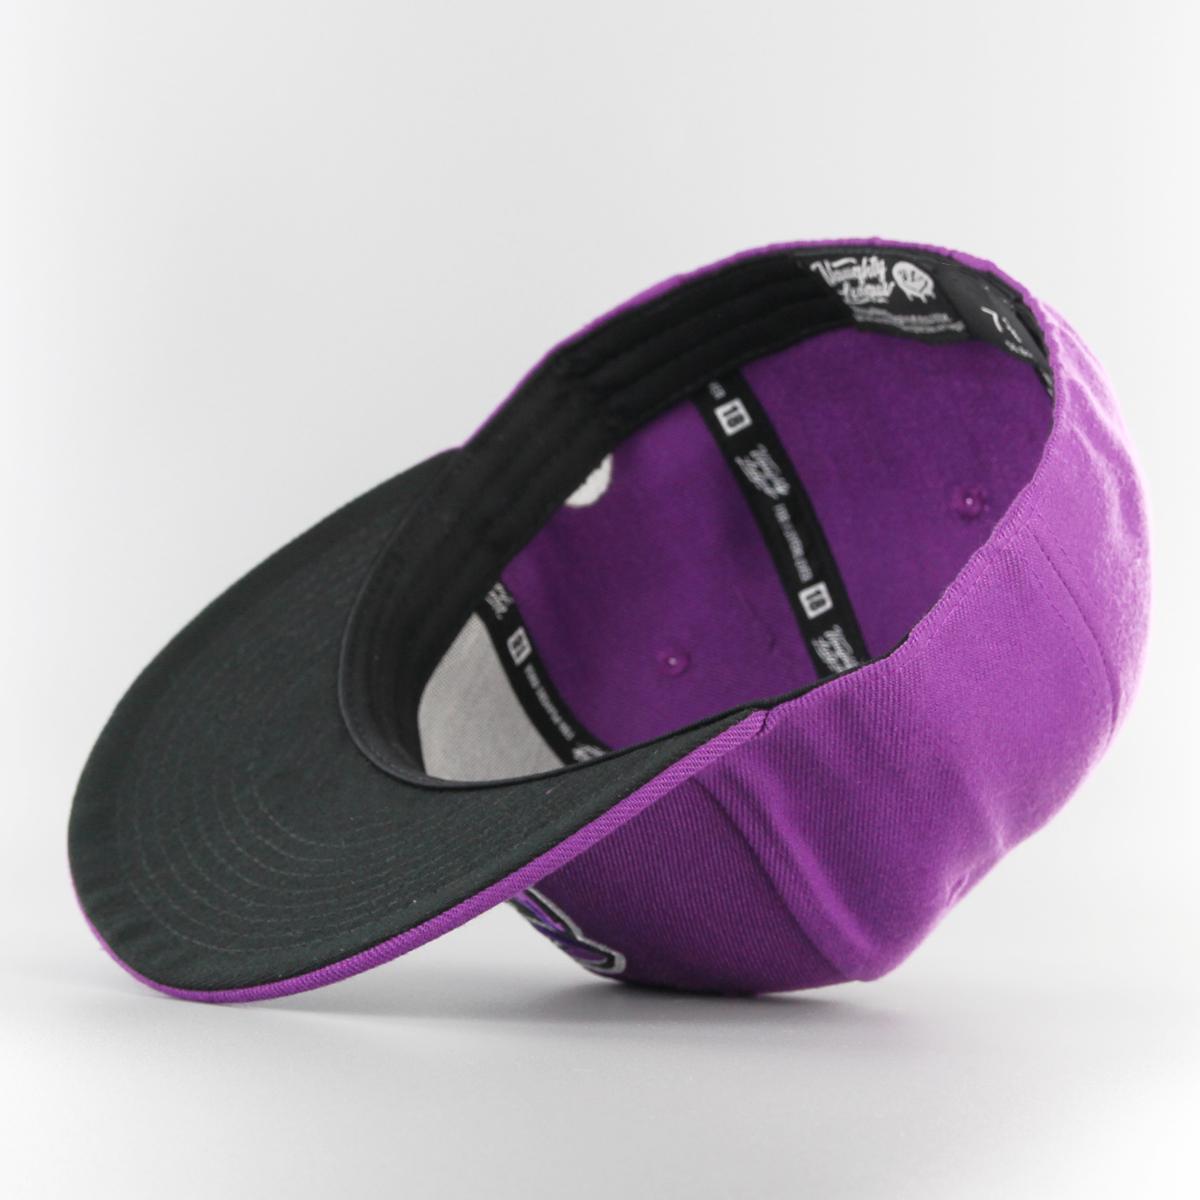 Naughty League San Jose Stalkers fitted purple - Shop-Tetuan